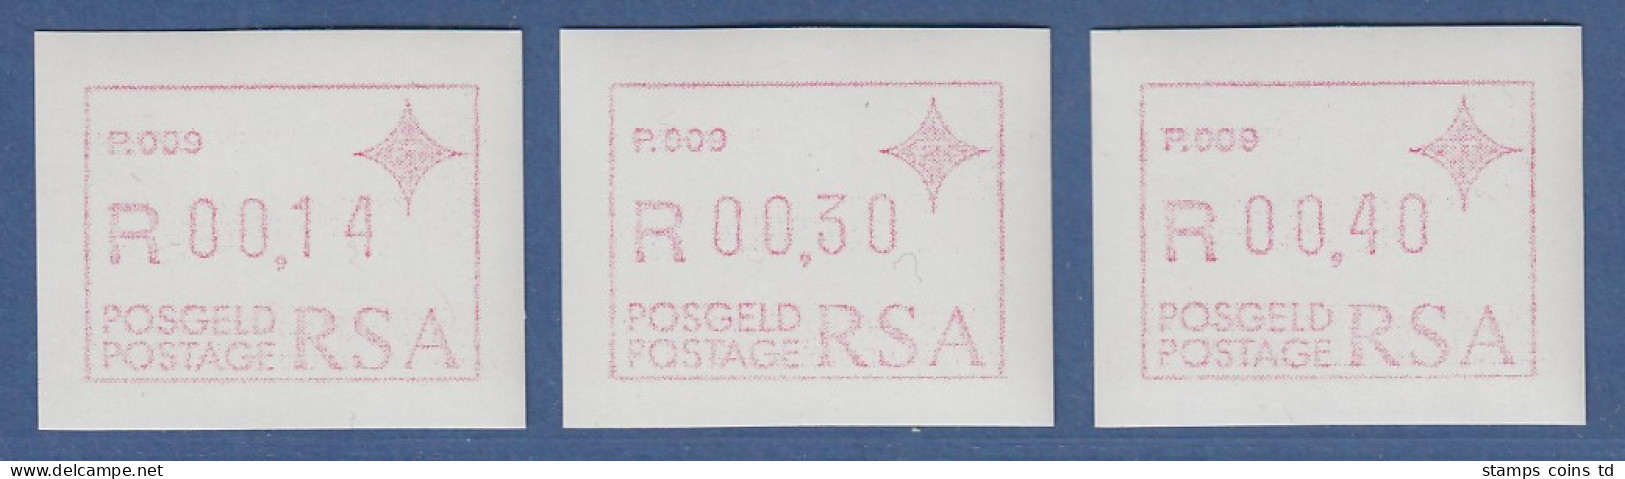 RSA Südafrika FRAMA-ATM  Aut.-Nr. P.009 Satz 14-30-40 ** (VS) - Vignettes D'affranchissement (Frama)